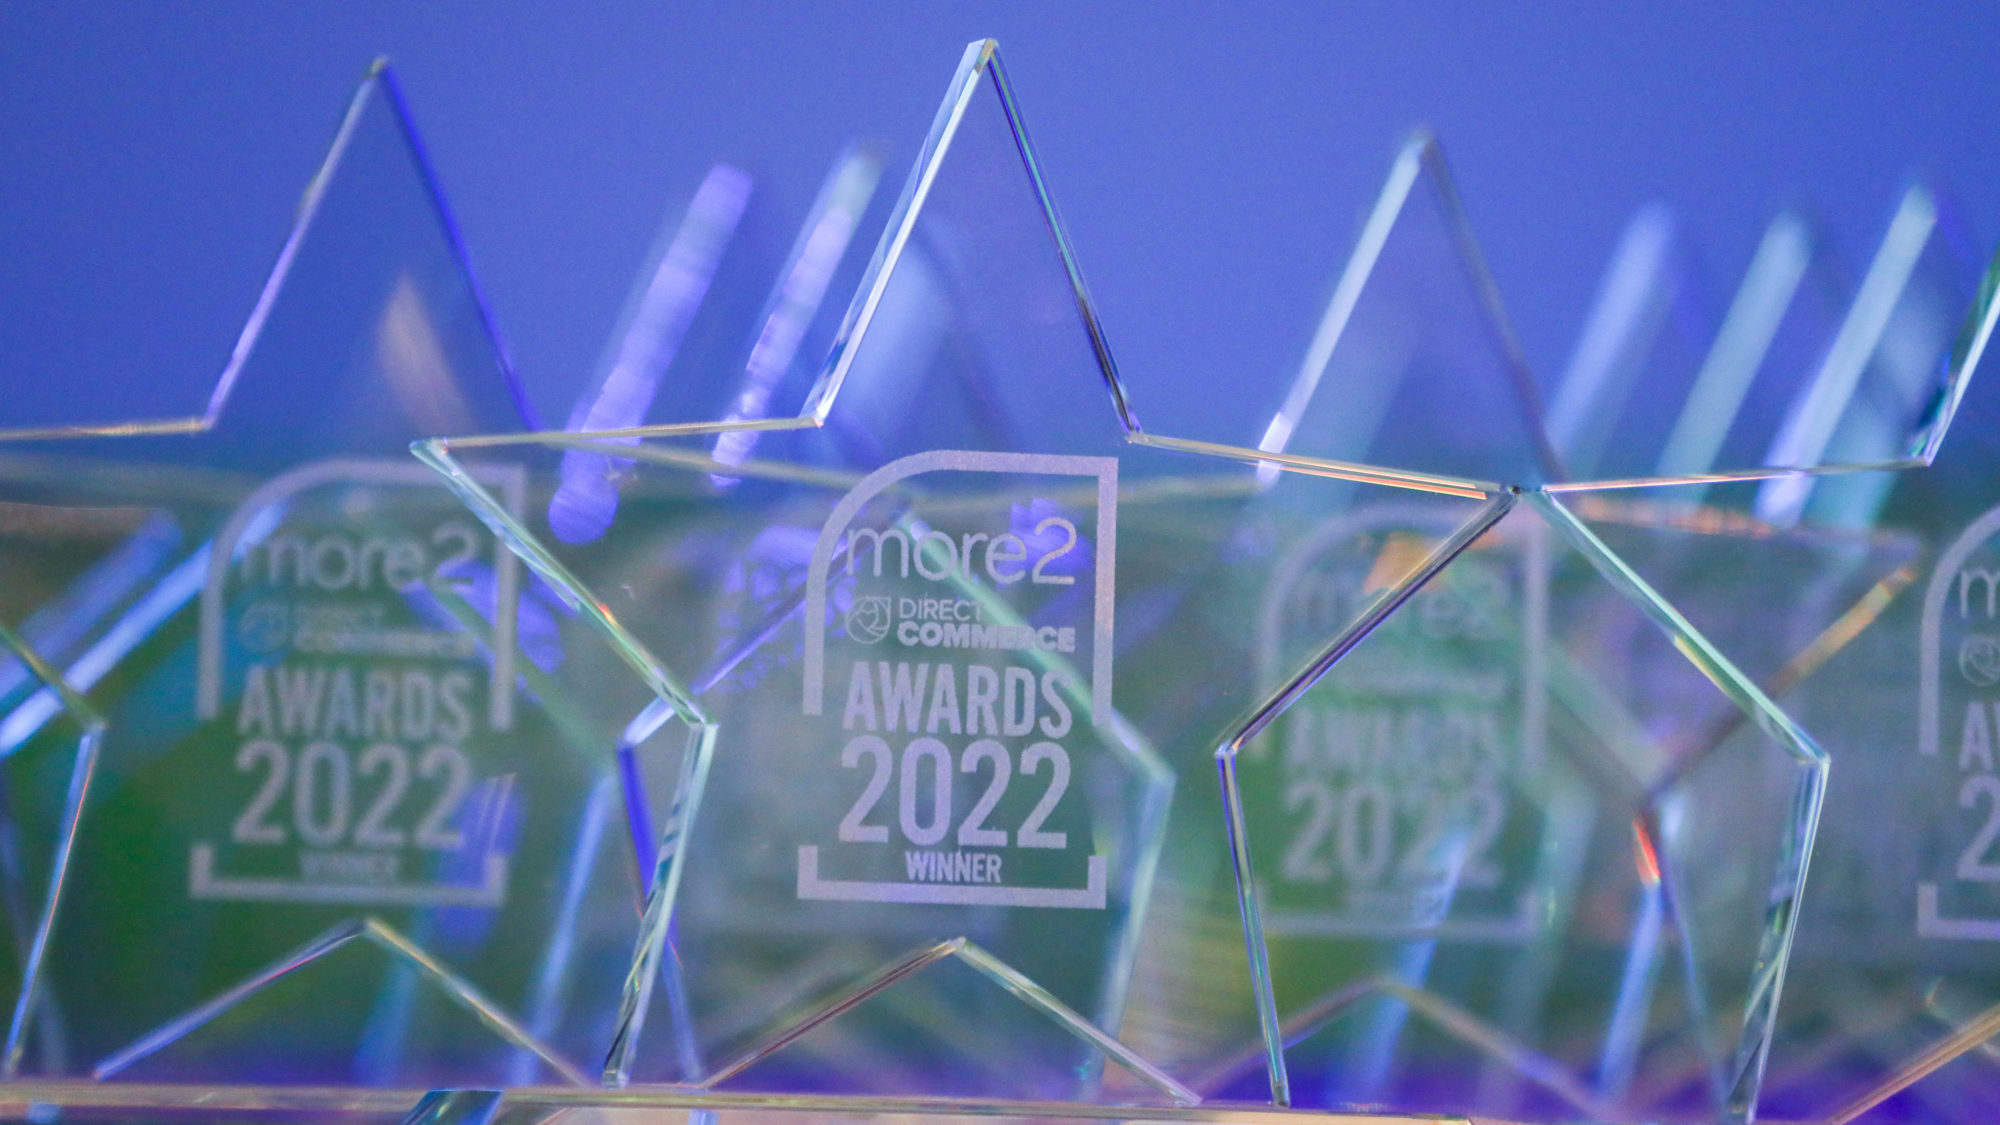 2022 More2 Direct Commerce Award Winners